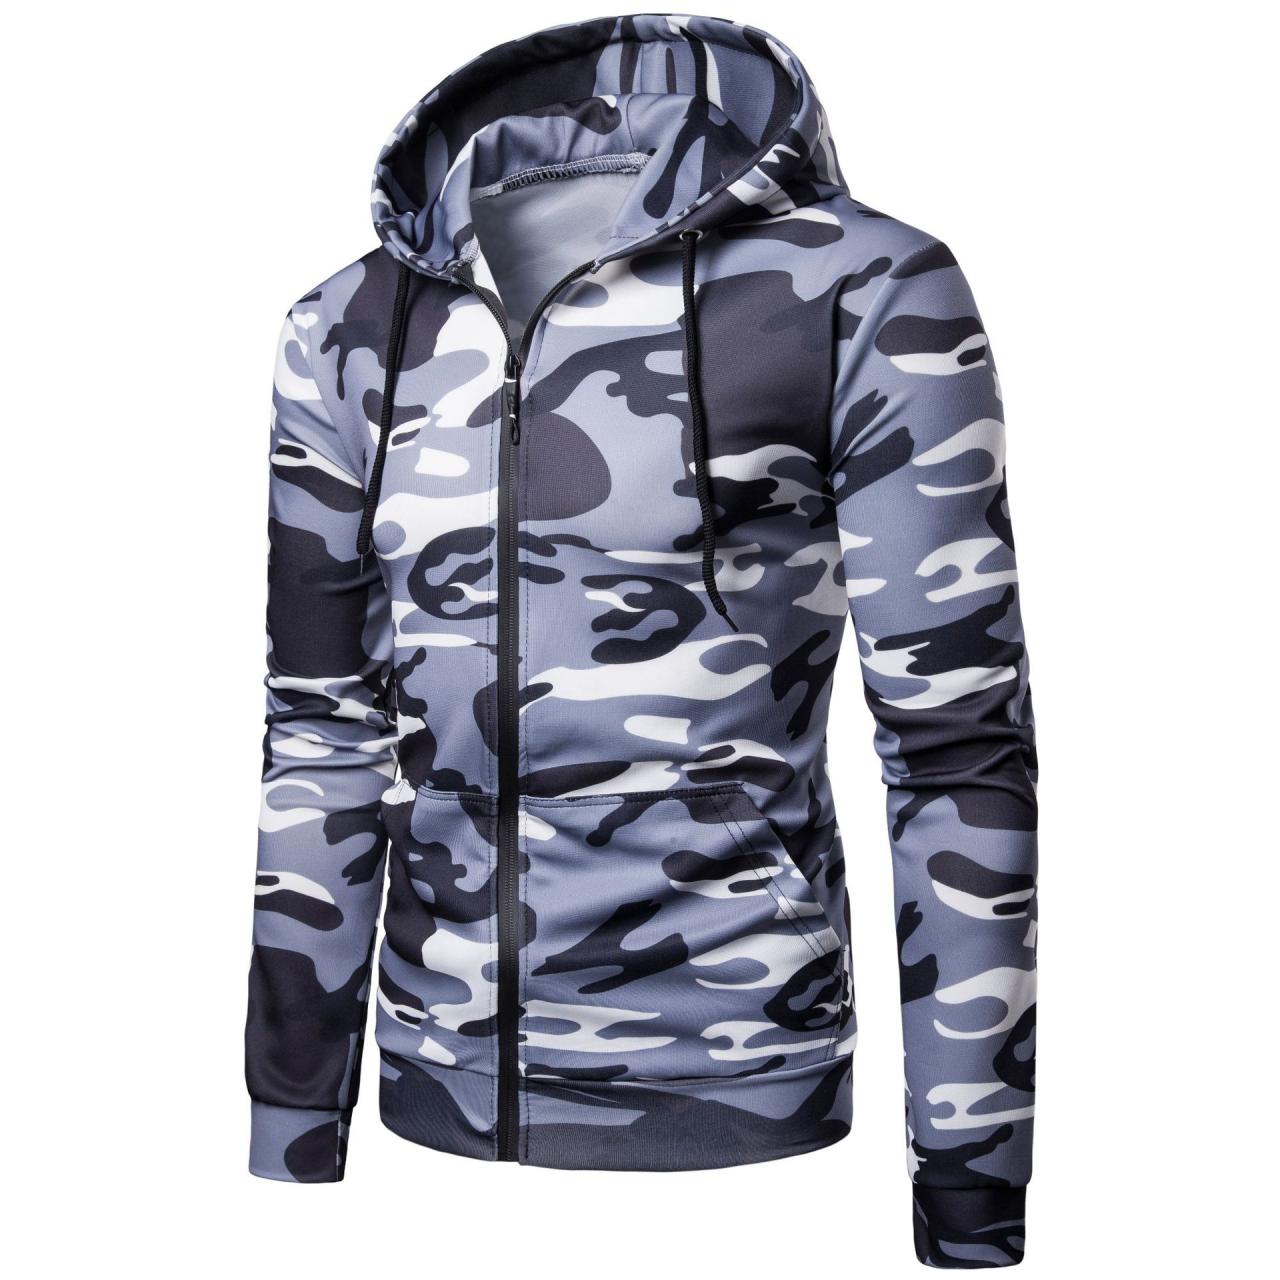  Men Camouflage Coat Spring Autumn Thin Slim Long Sleeve Zipper Hooded Jacket Windbreaker Outwea gray